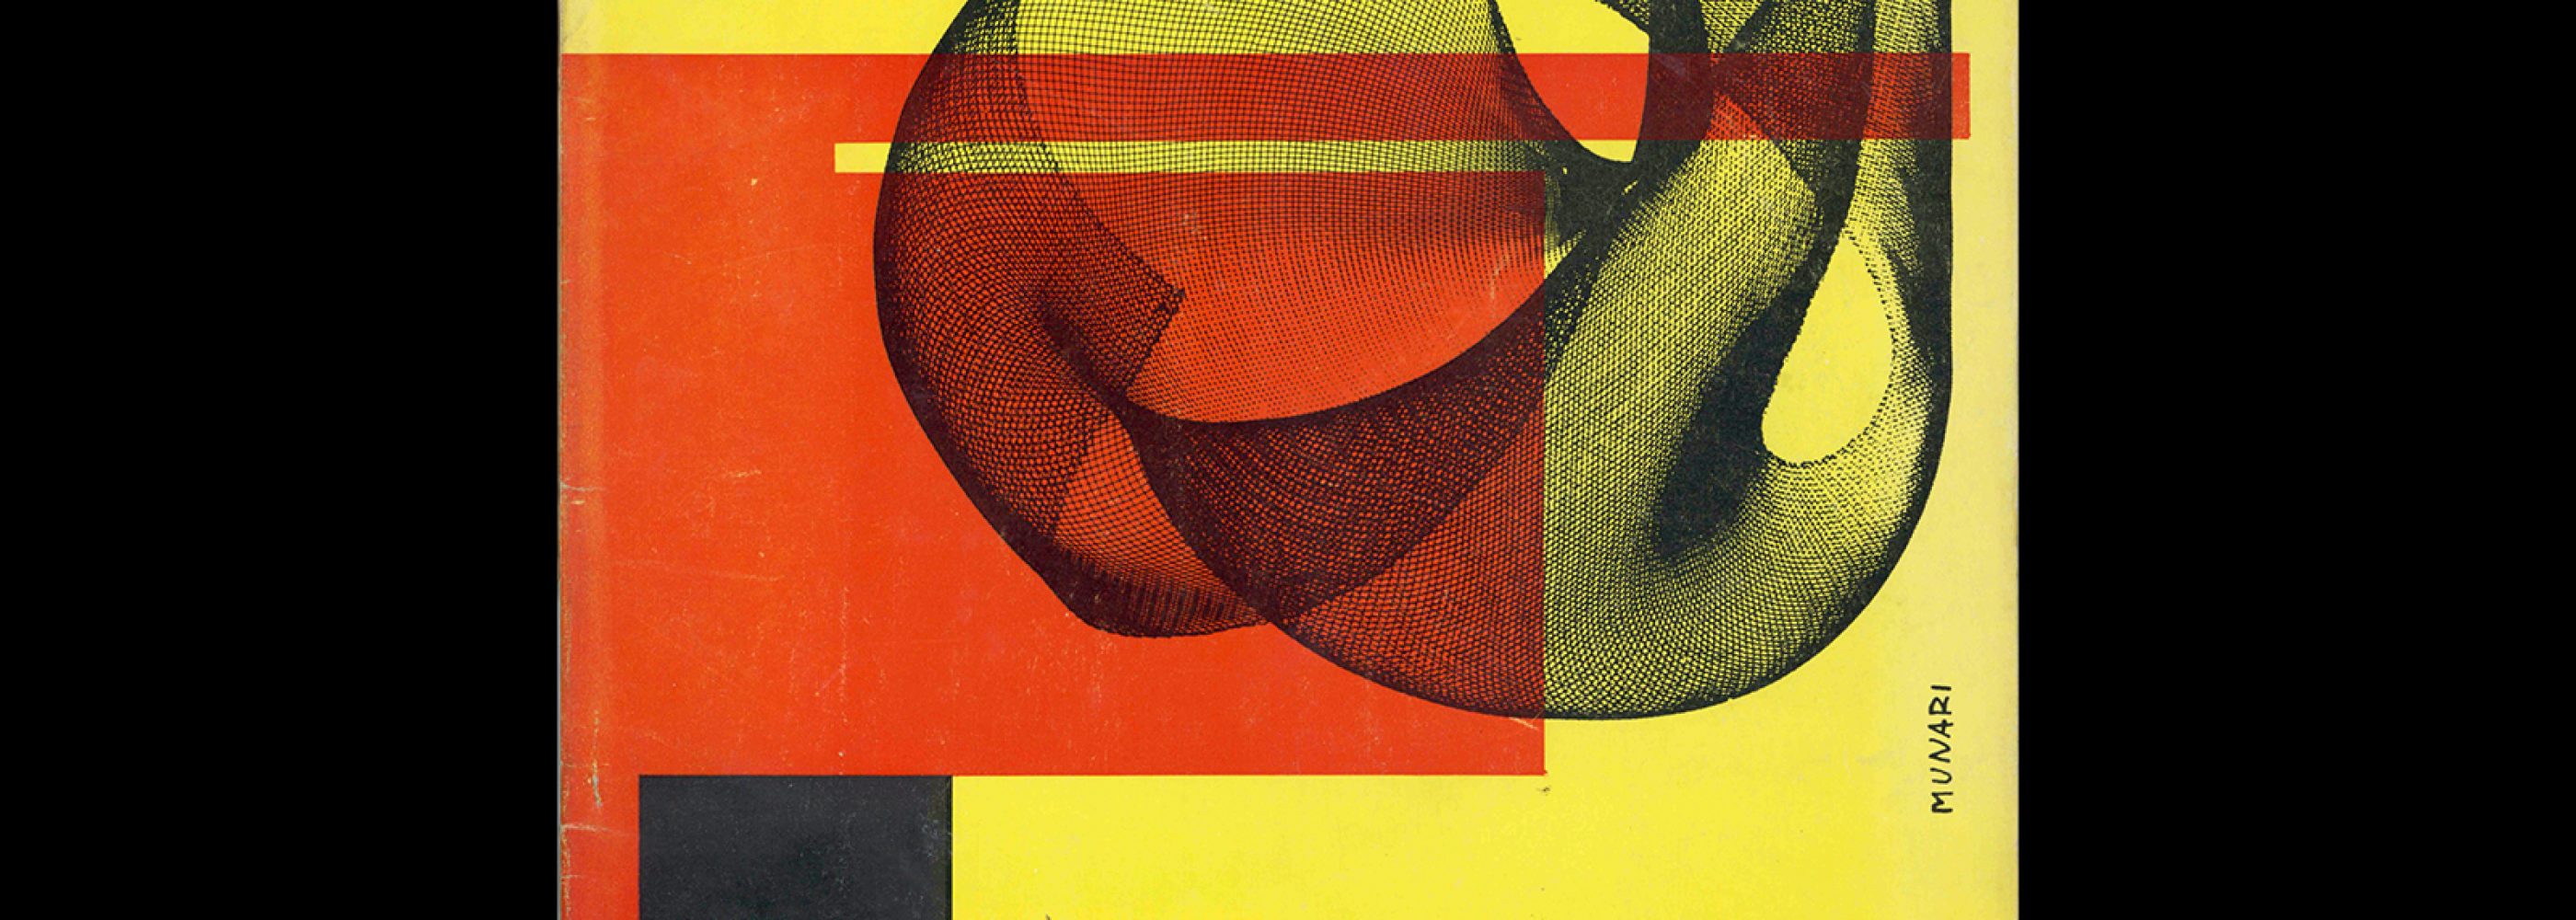 Interiors + Industrial Design, August 1955. Cover design by Bruno Munari